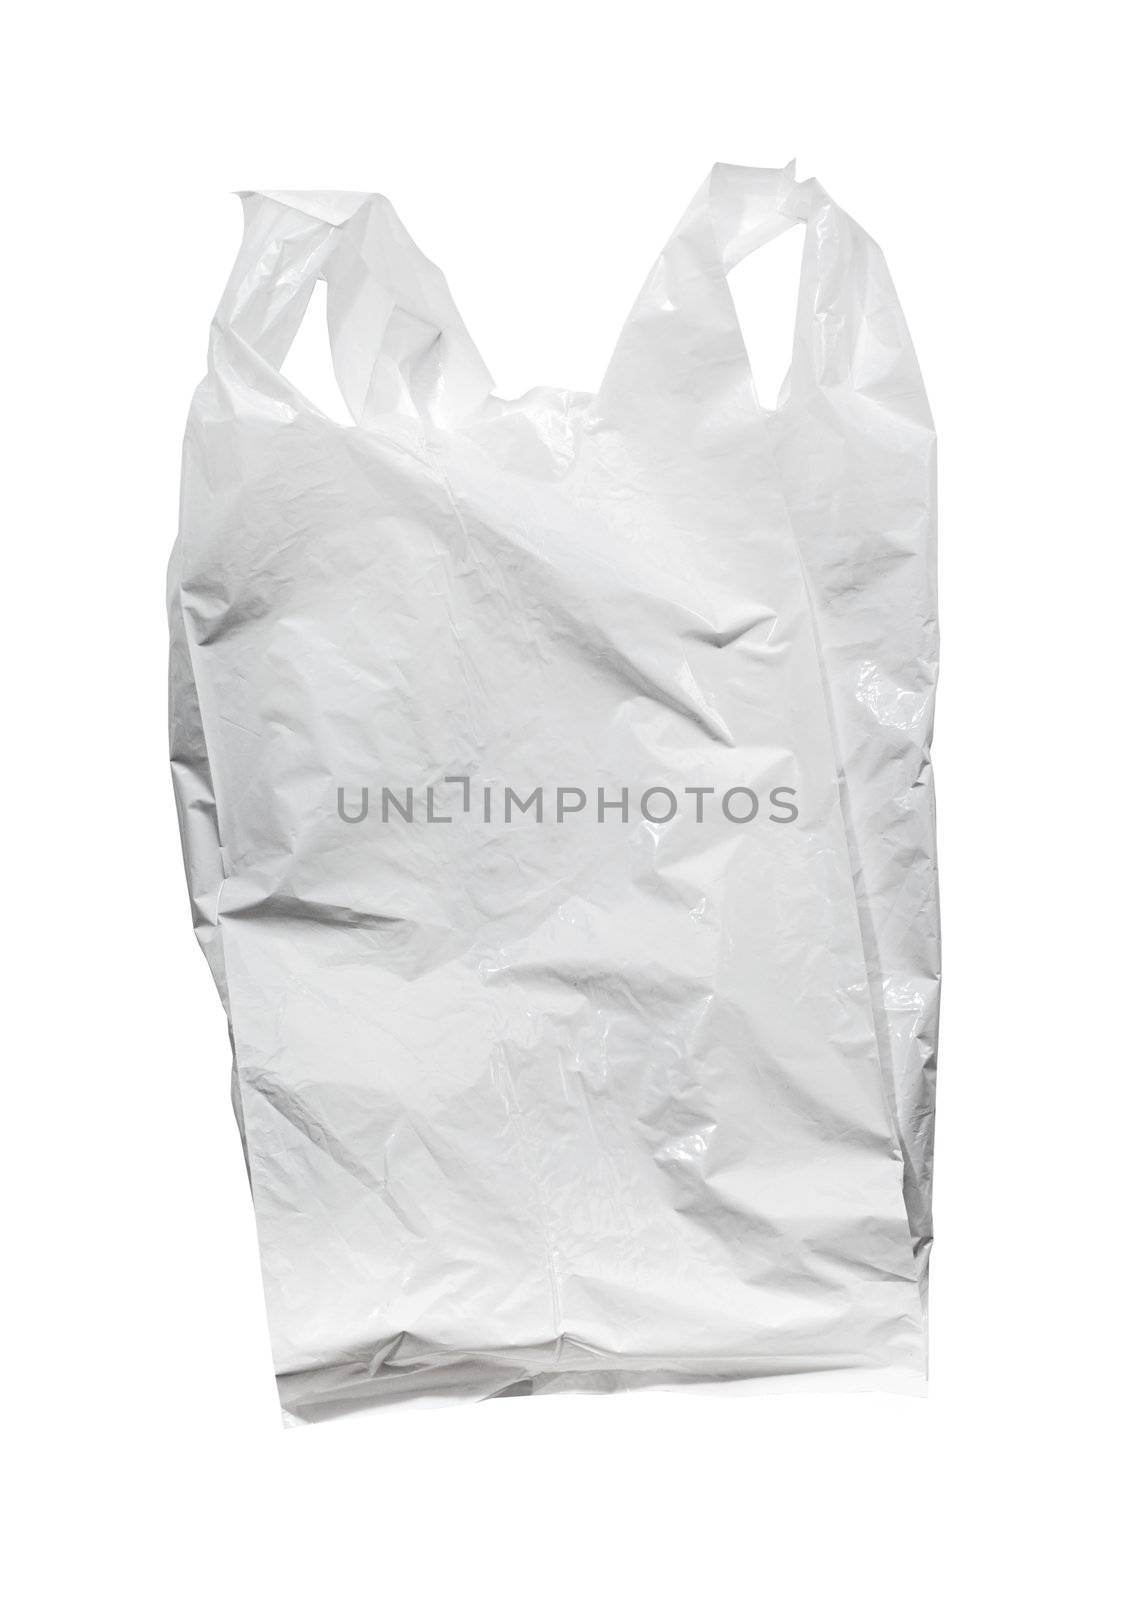 Plastic bag by Stocksnapper